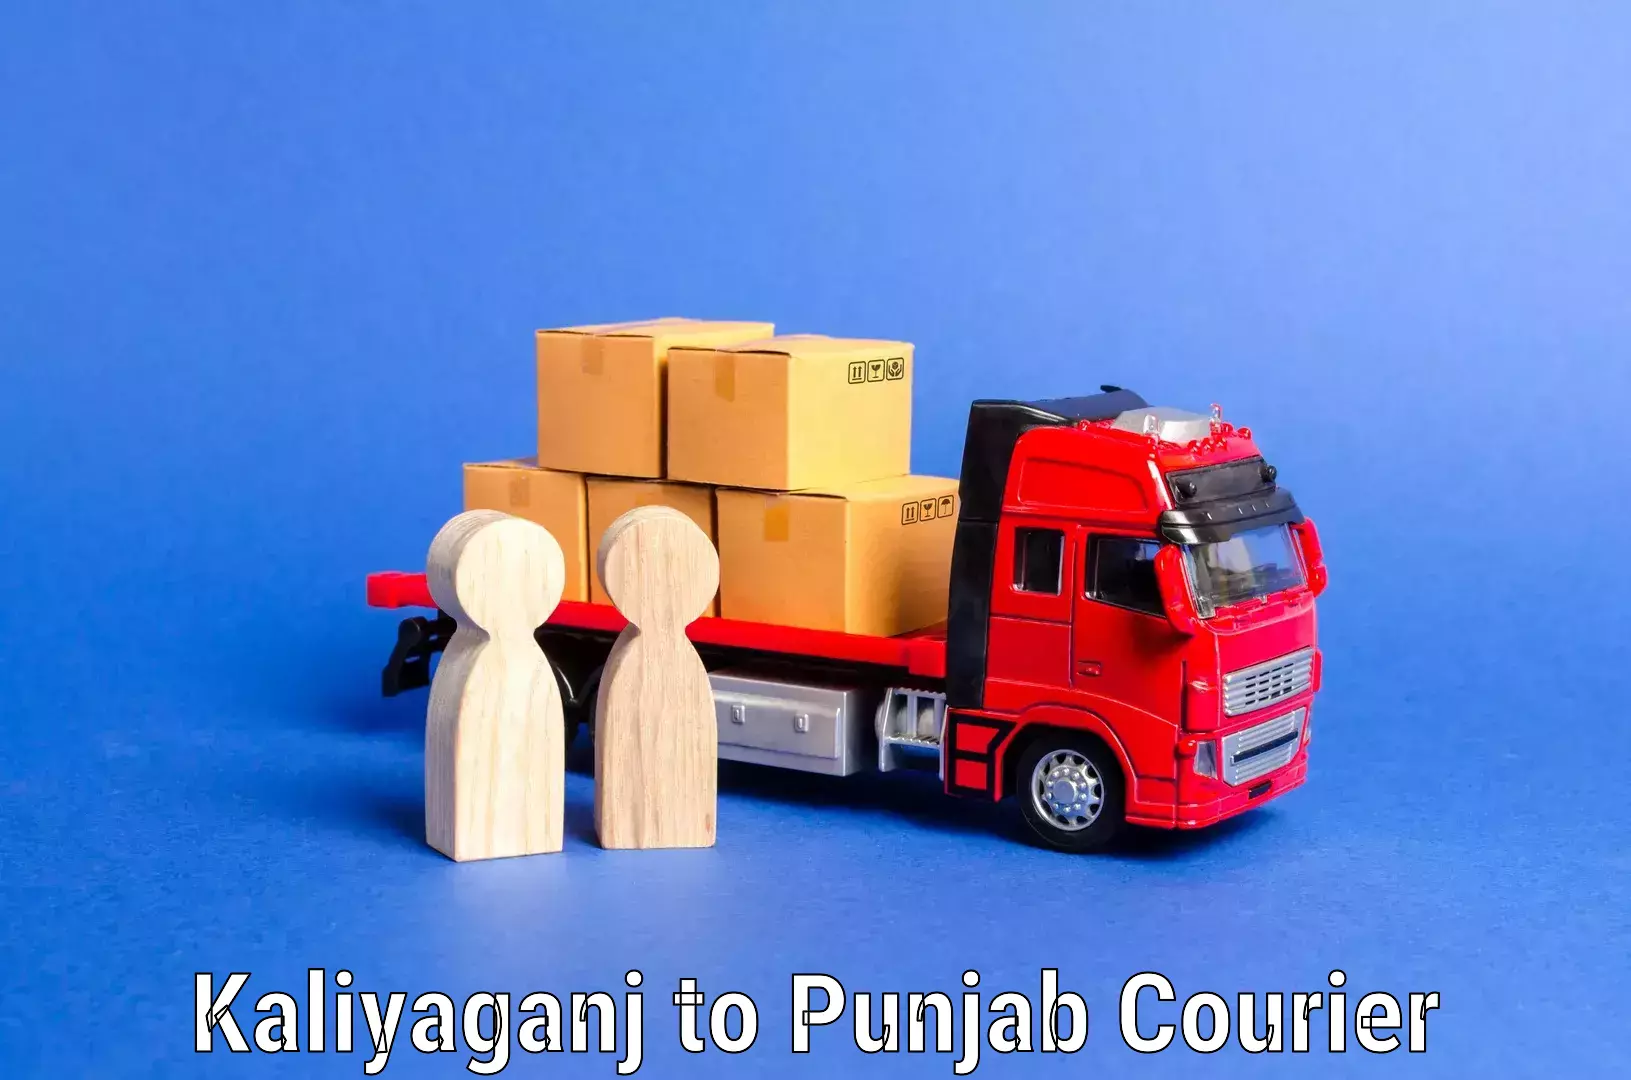 Professional movers and packers Kaliyaganj to Punjab